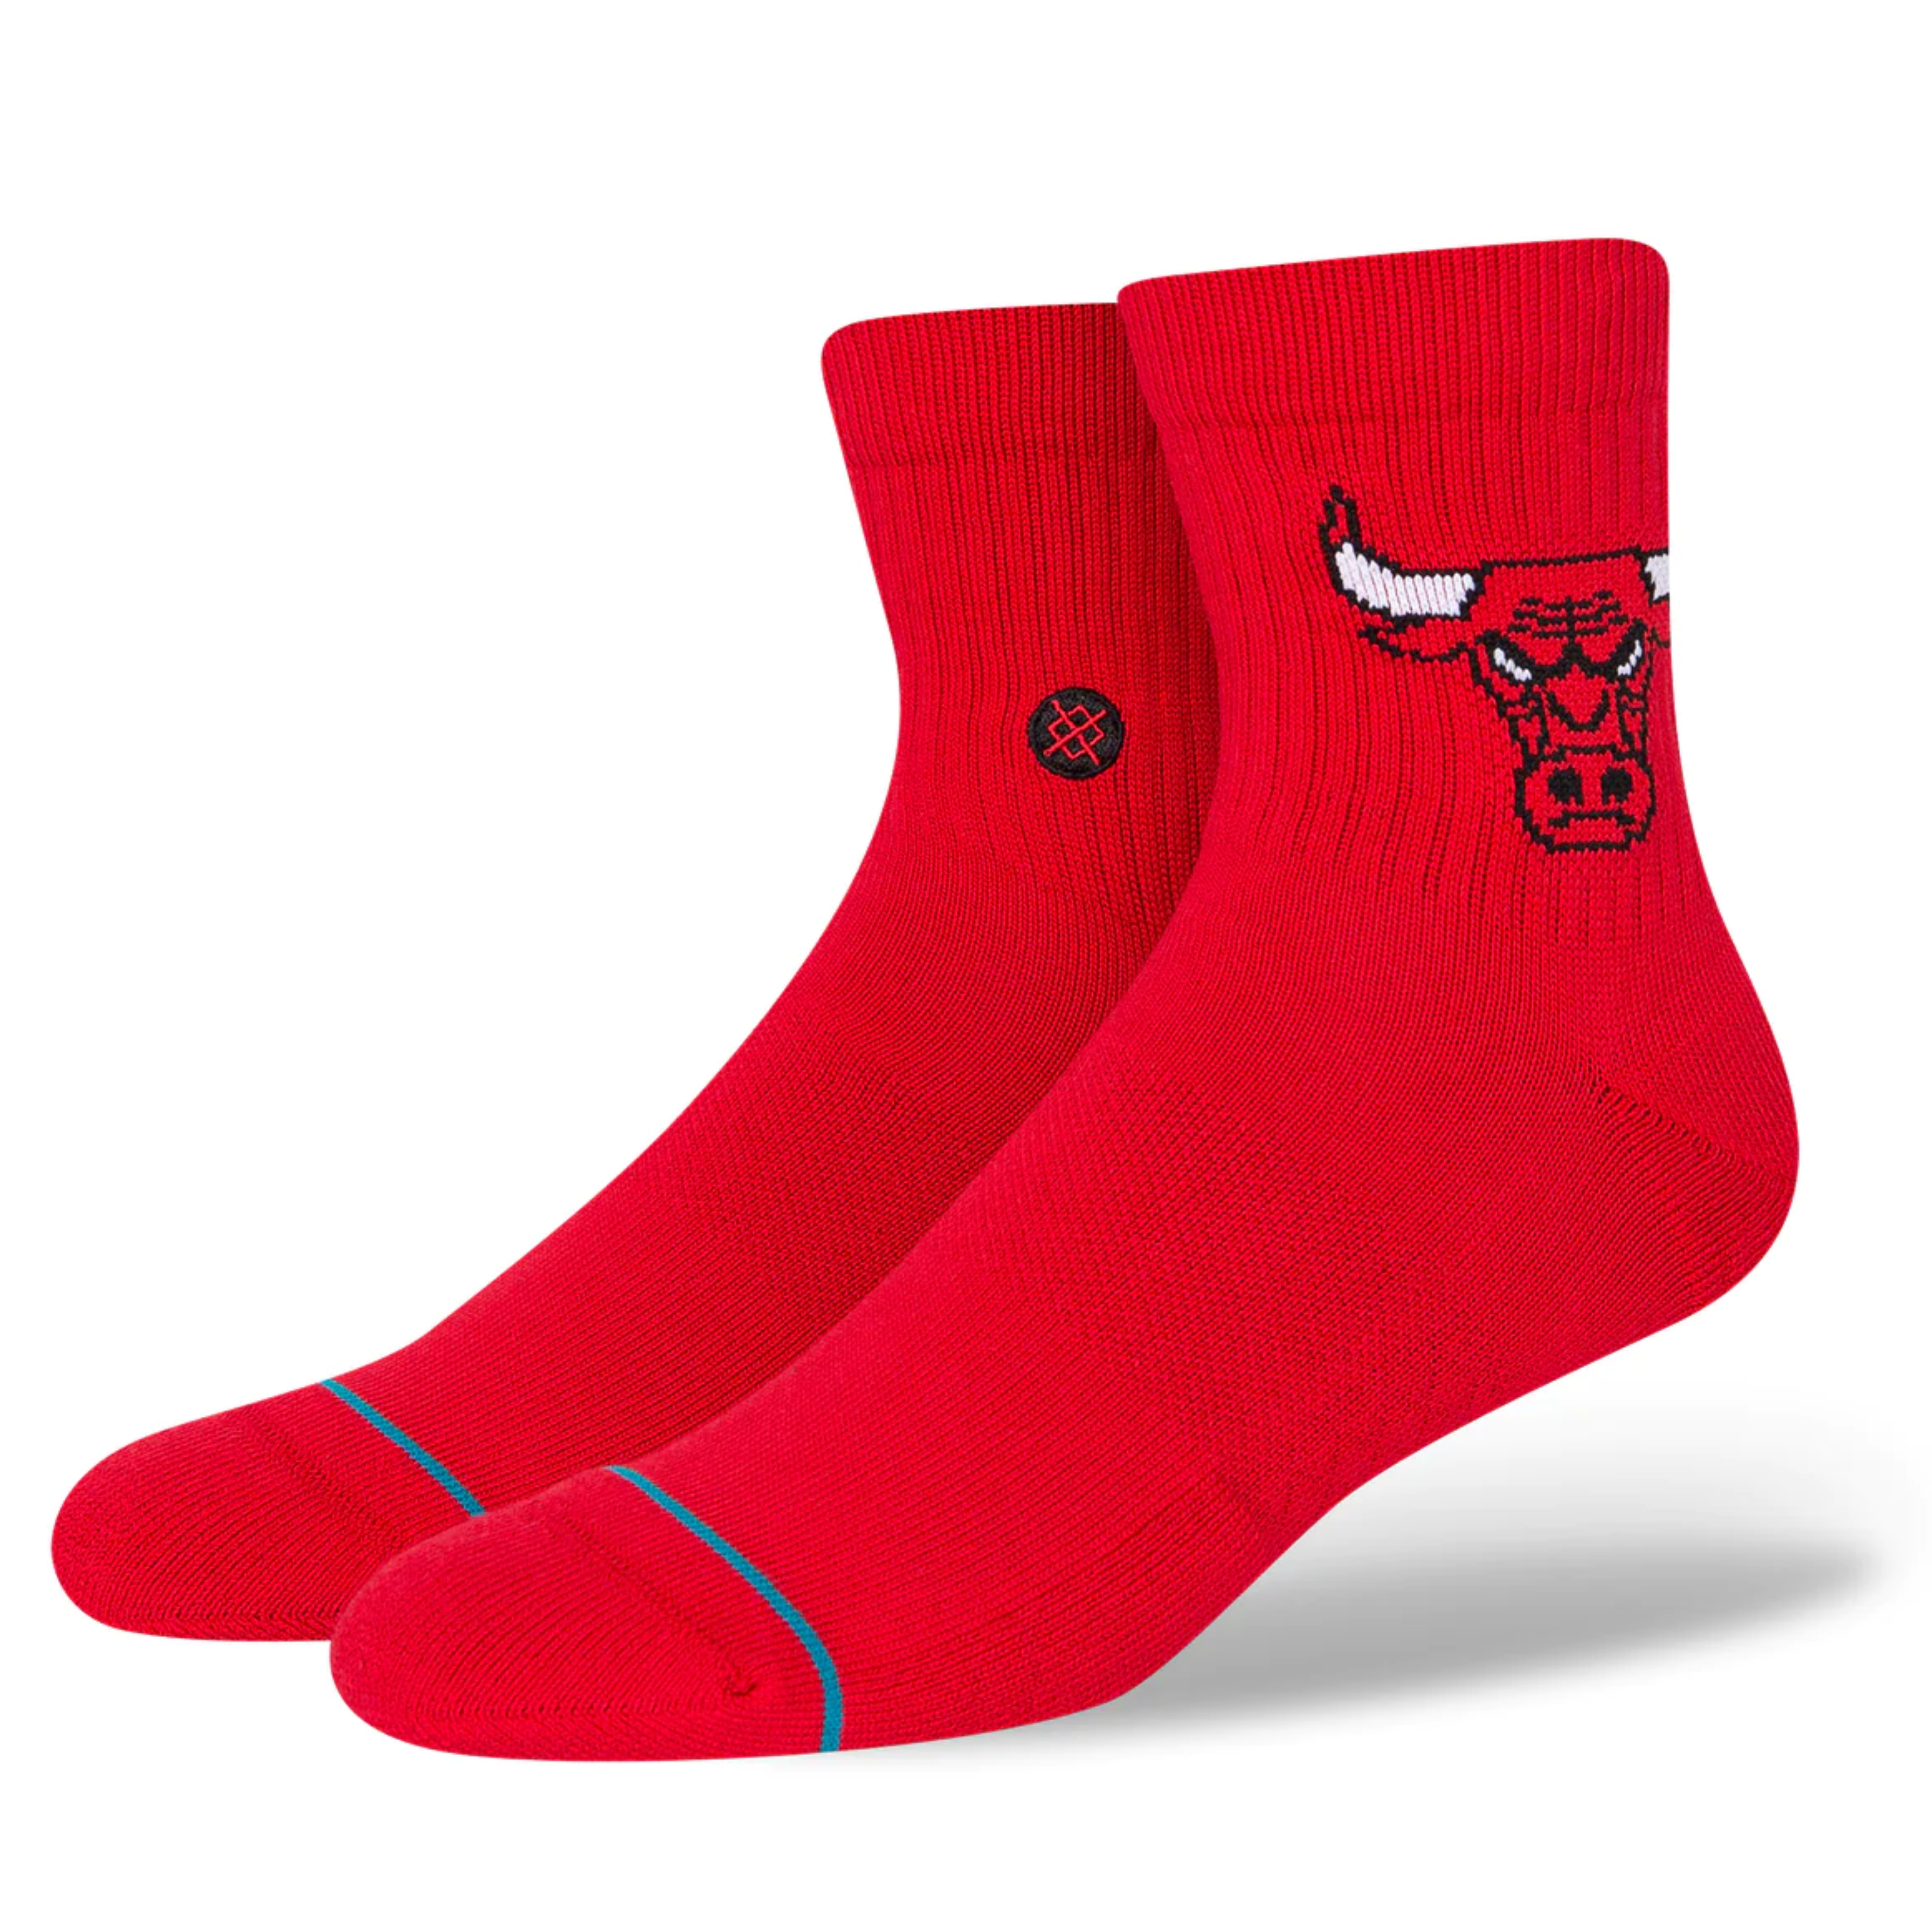 NBA - Chicago Bulls - Red